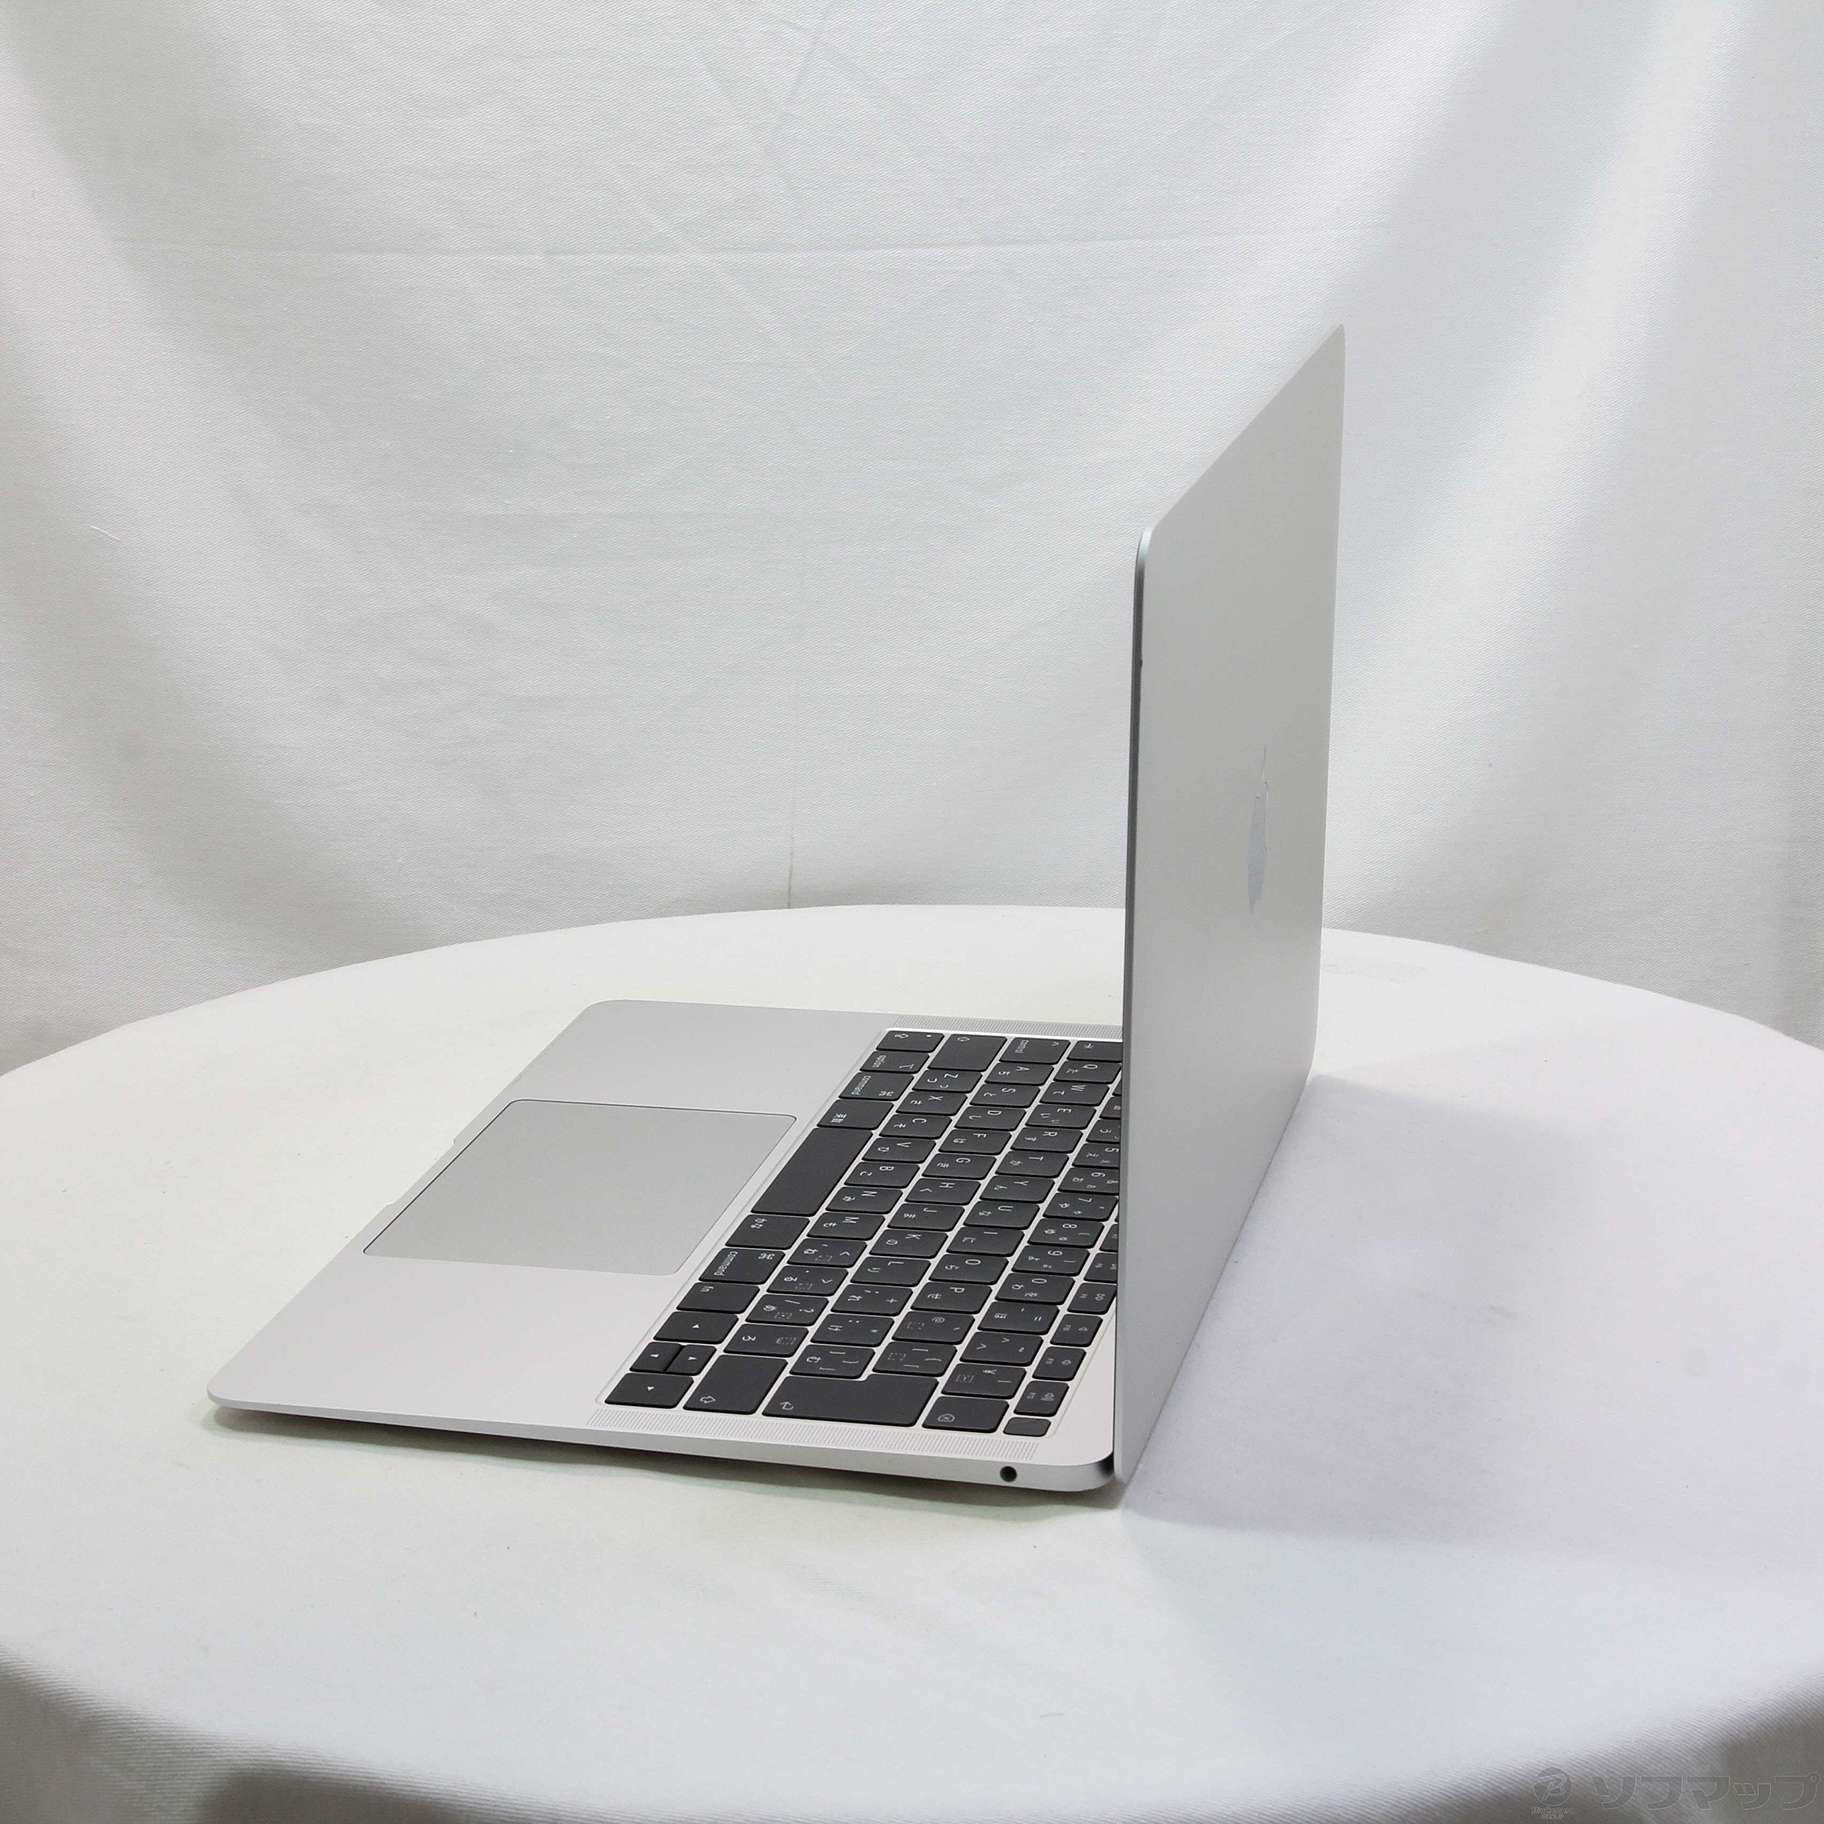 中古】MacBook Air 13.3-inch Mid 2019 MVFL2J／A Core_i5 1.6GHz 8GB